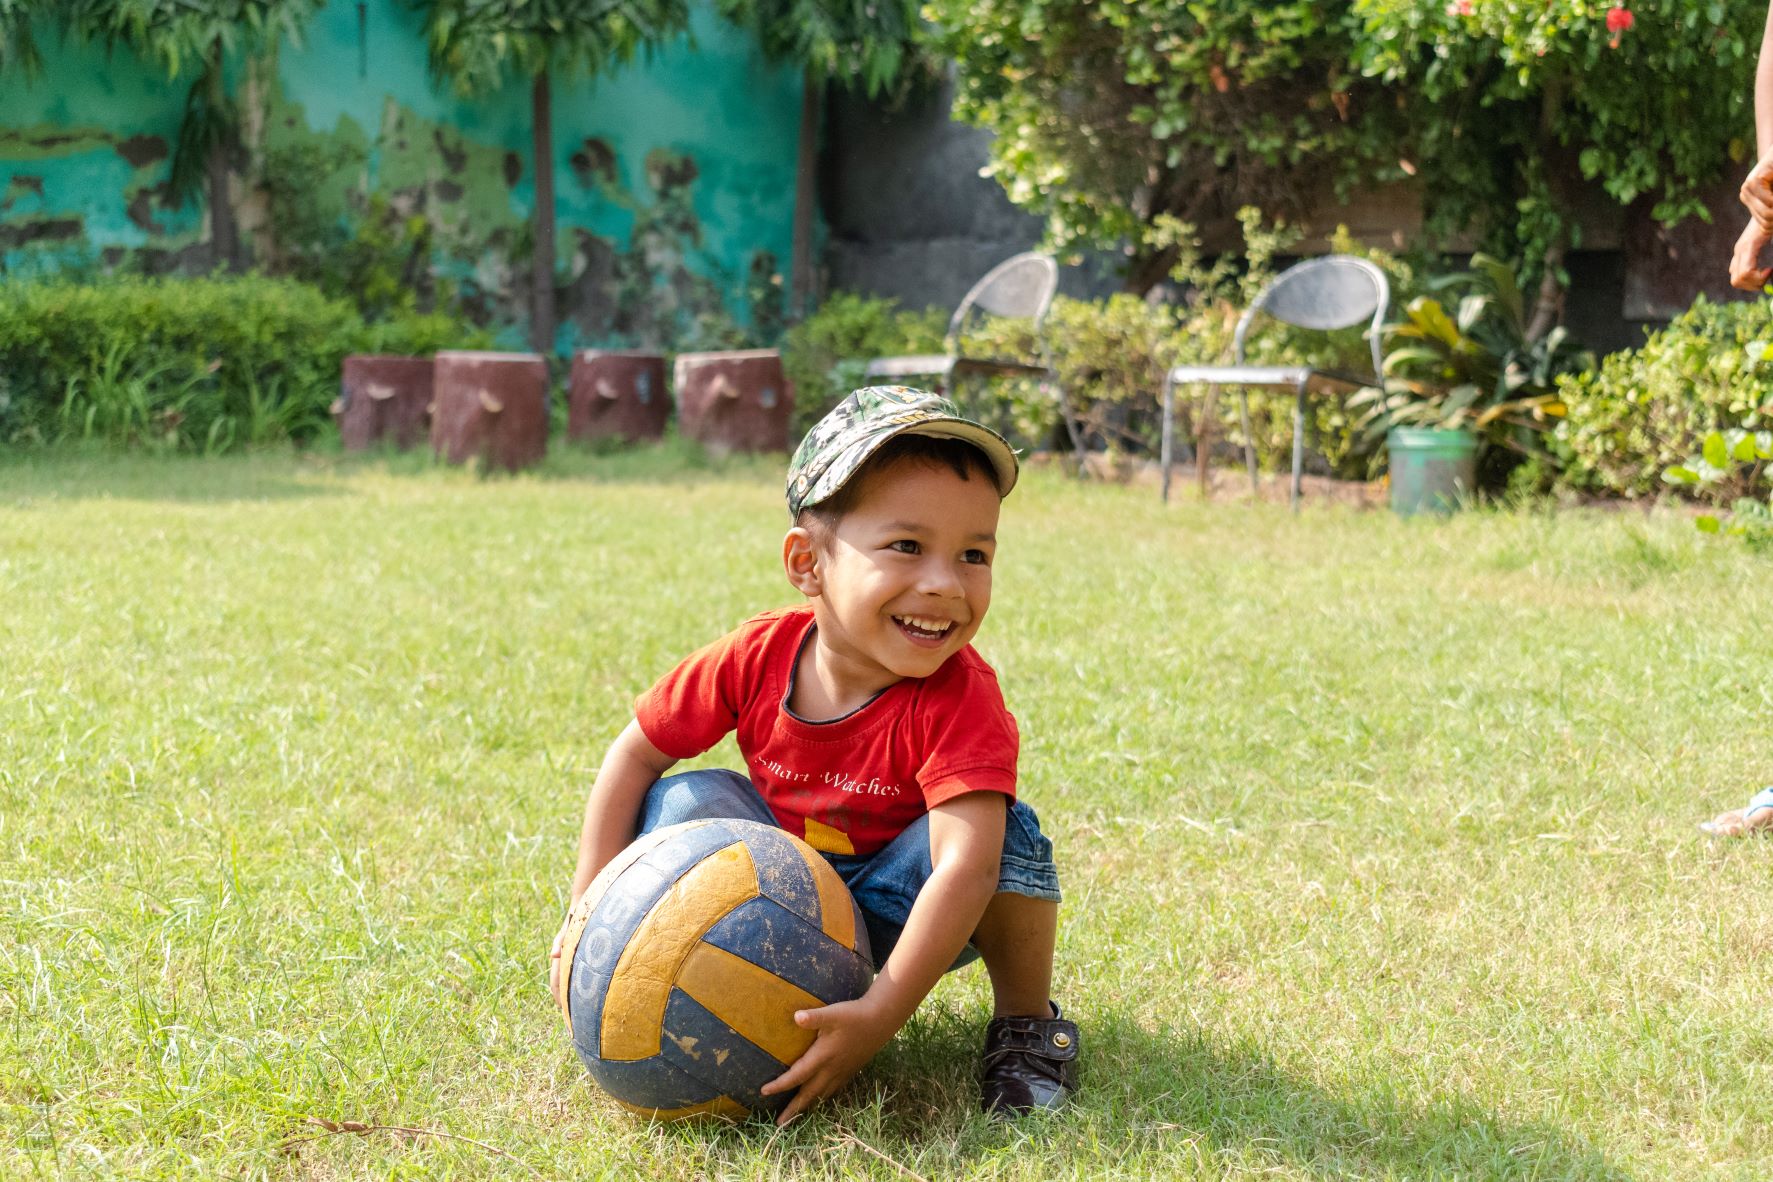 Rukhsana's son playing ball